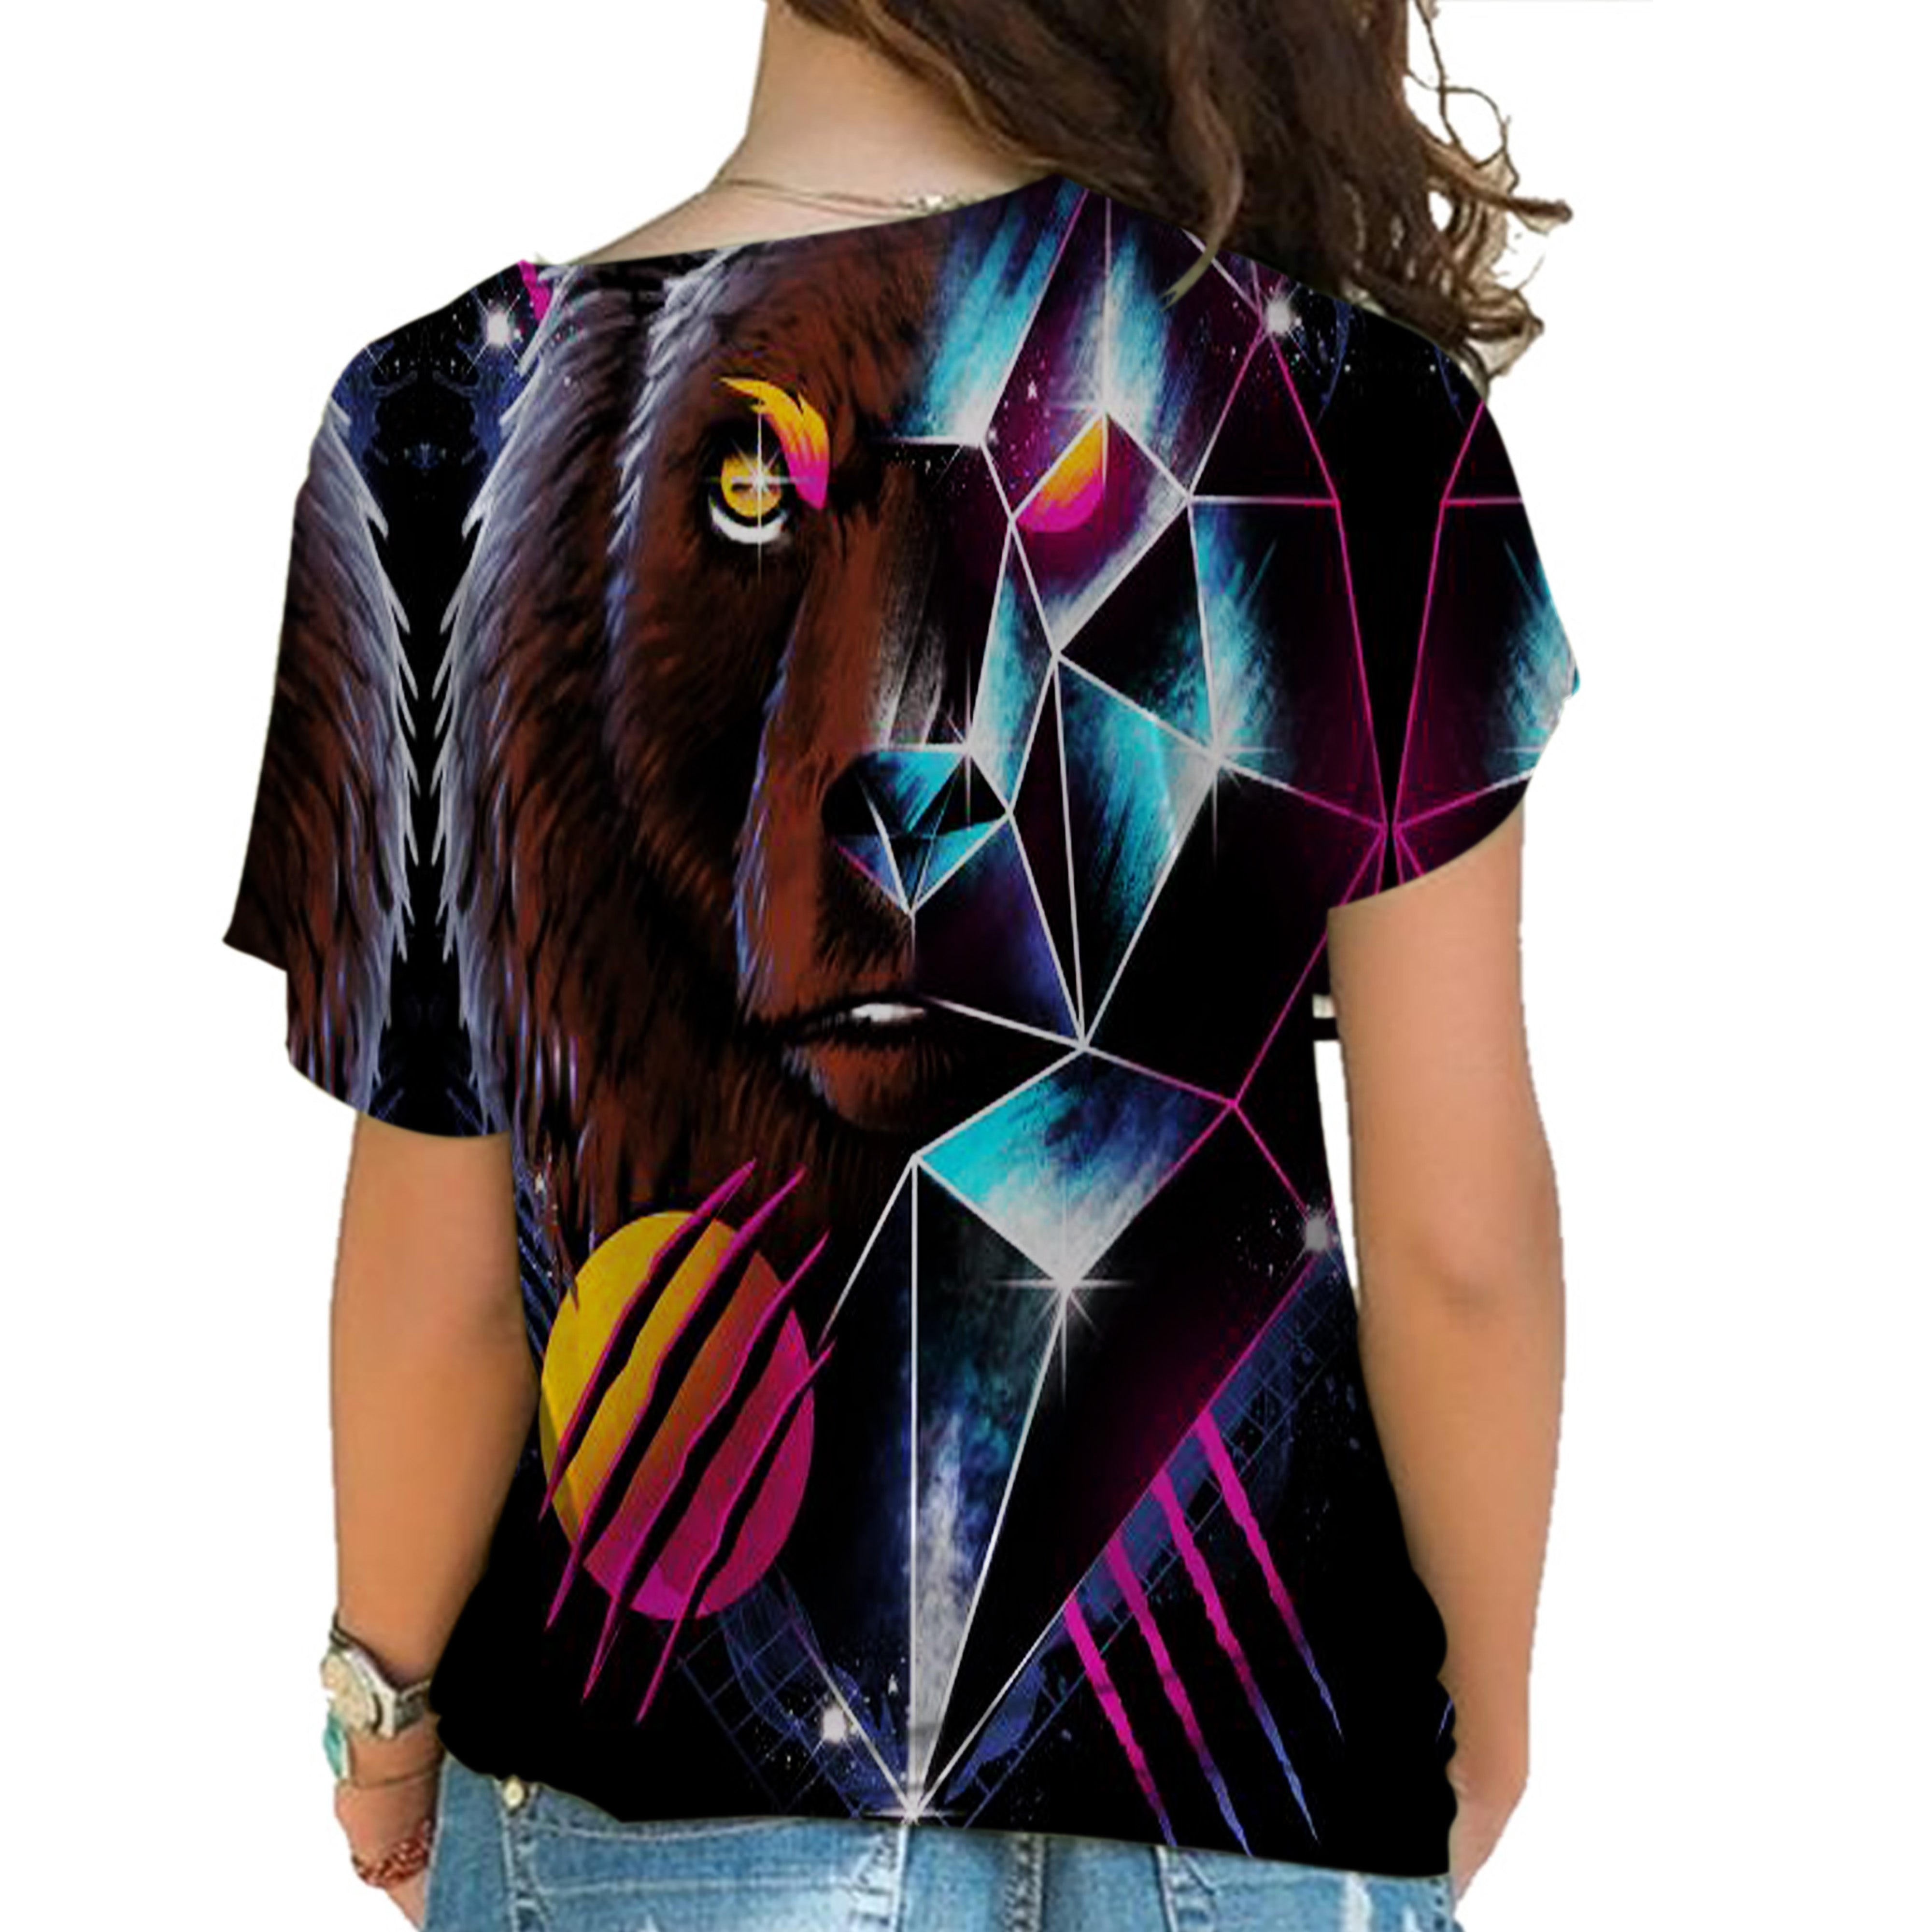 Powwow Store native american cross shoulder shirt 1109